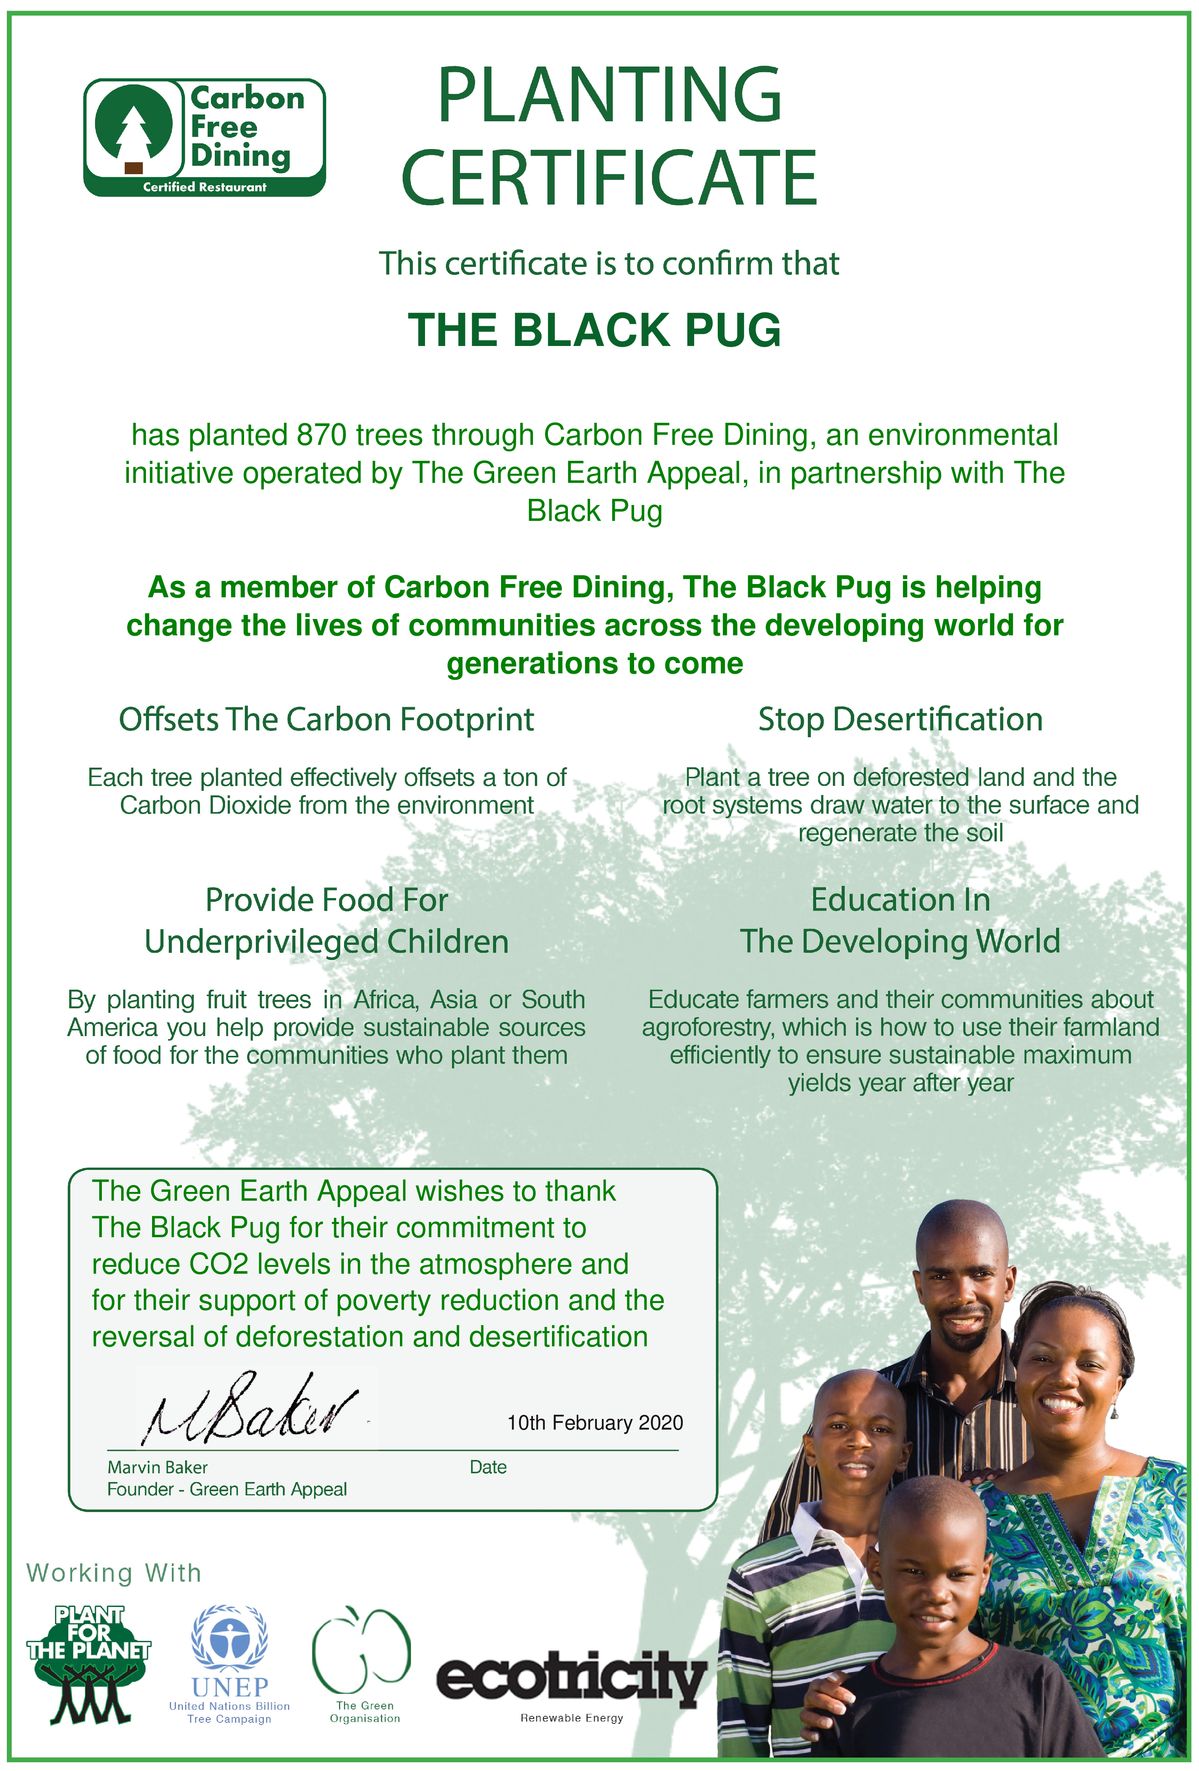 The Black Pug